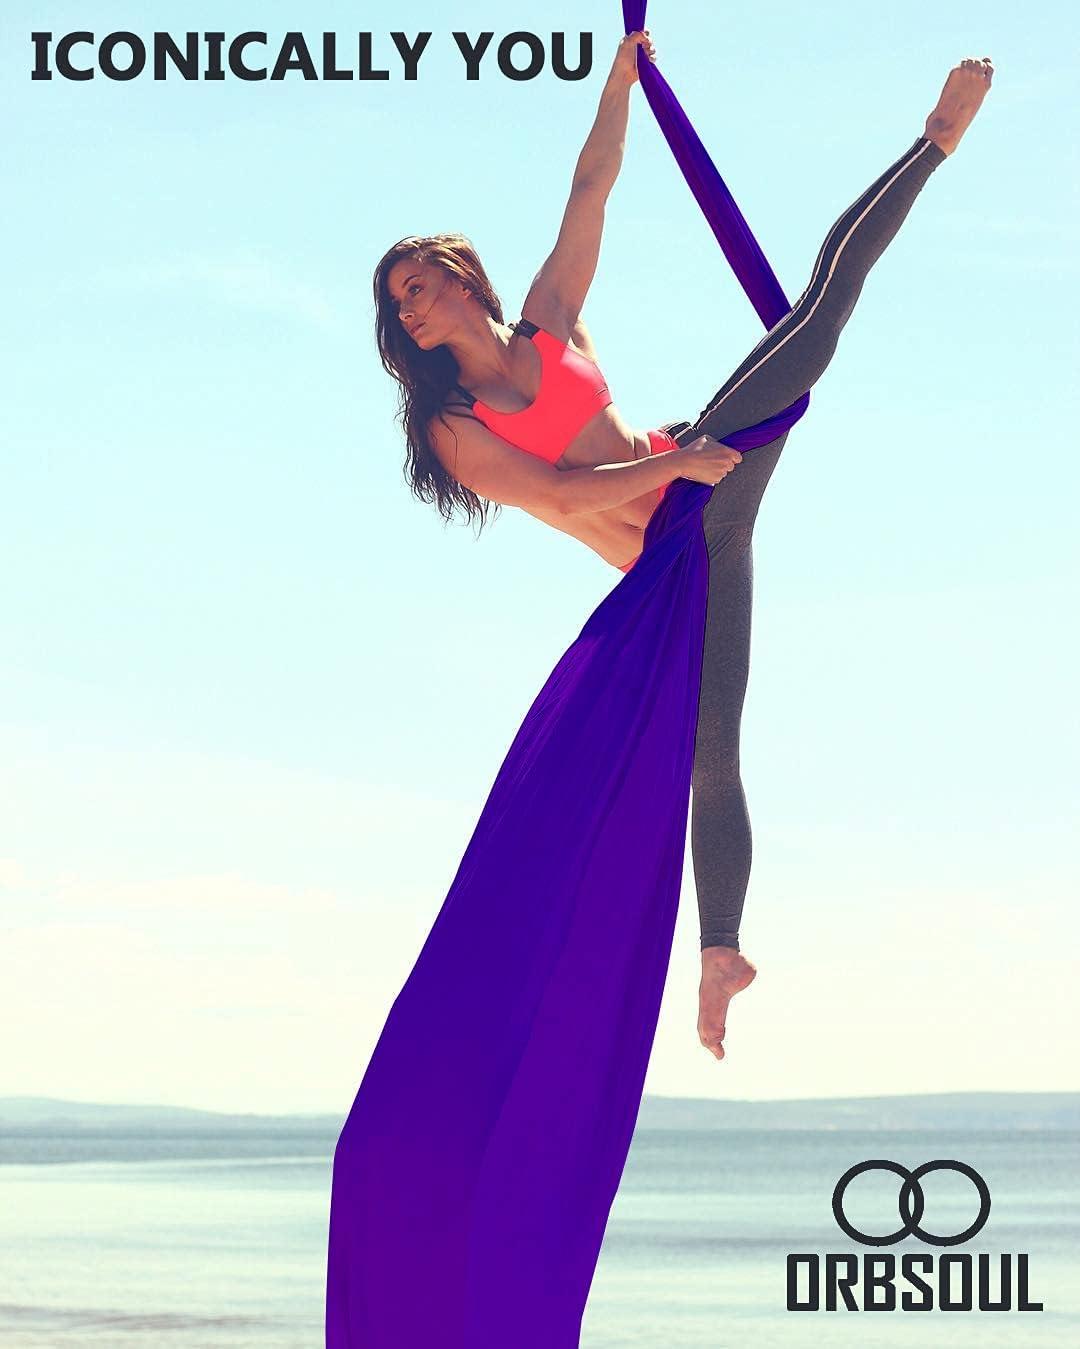 Orbsoul Aerial Silks + Yoga Hammock (Professional Grade) Includes